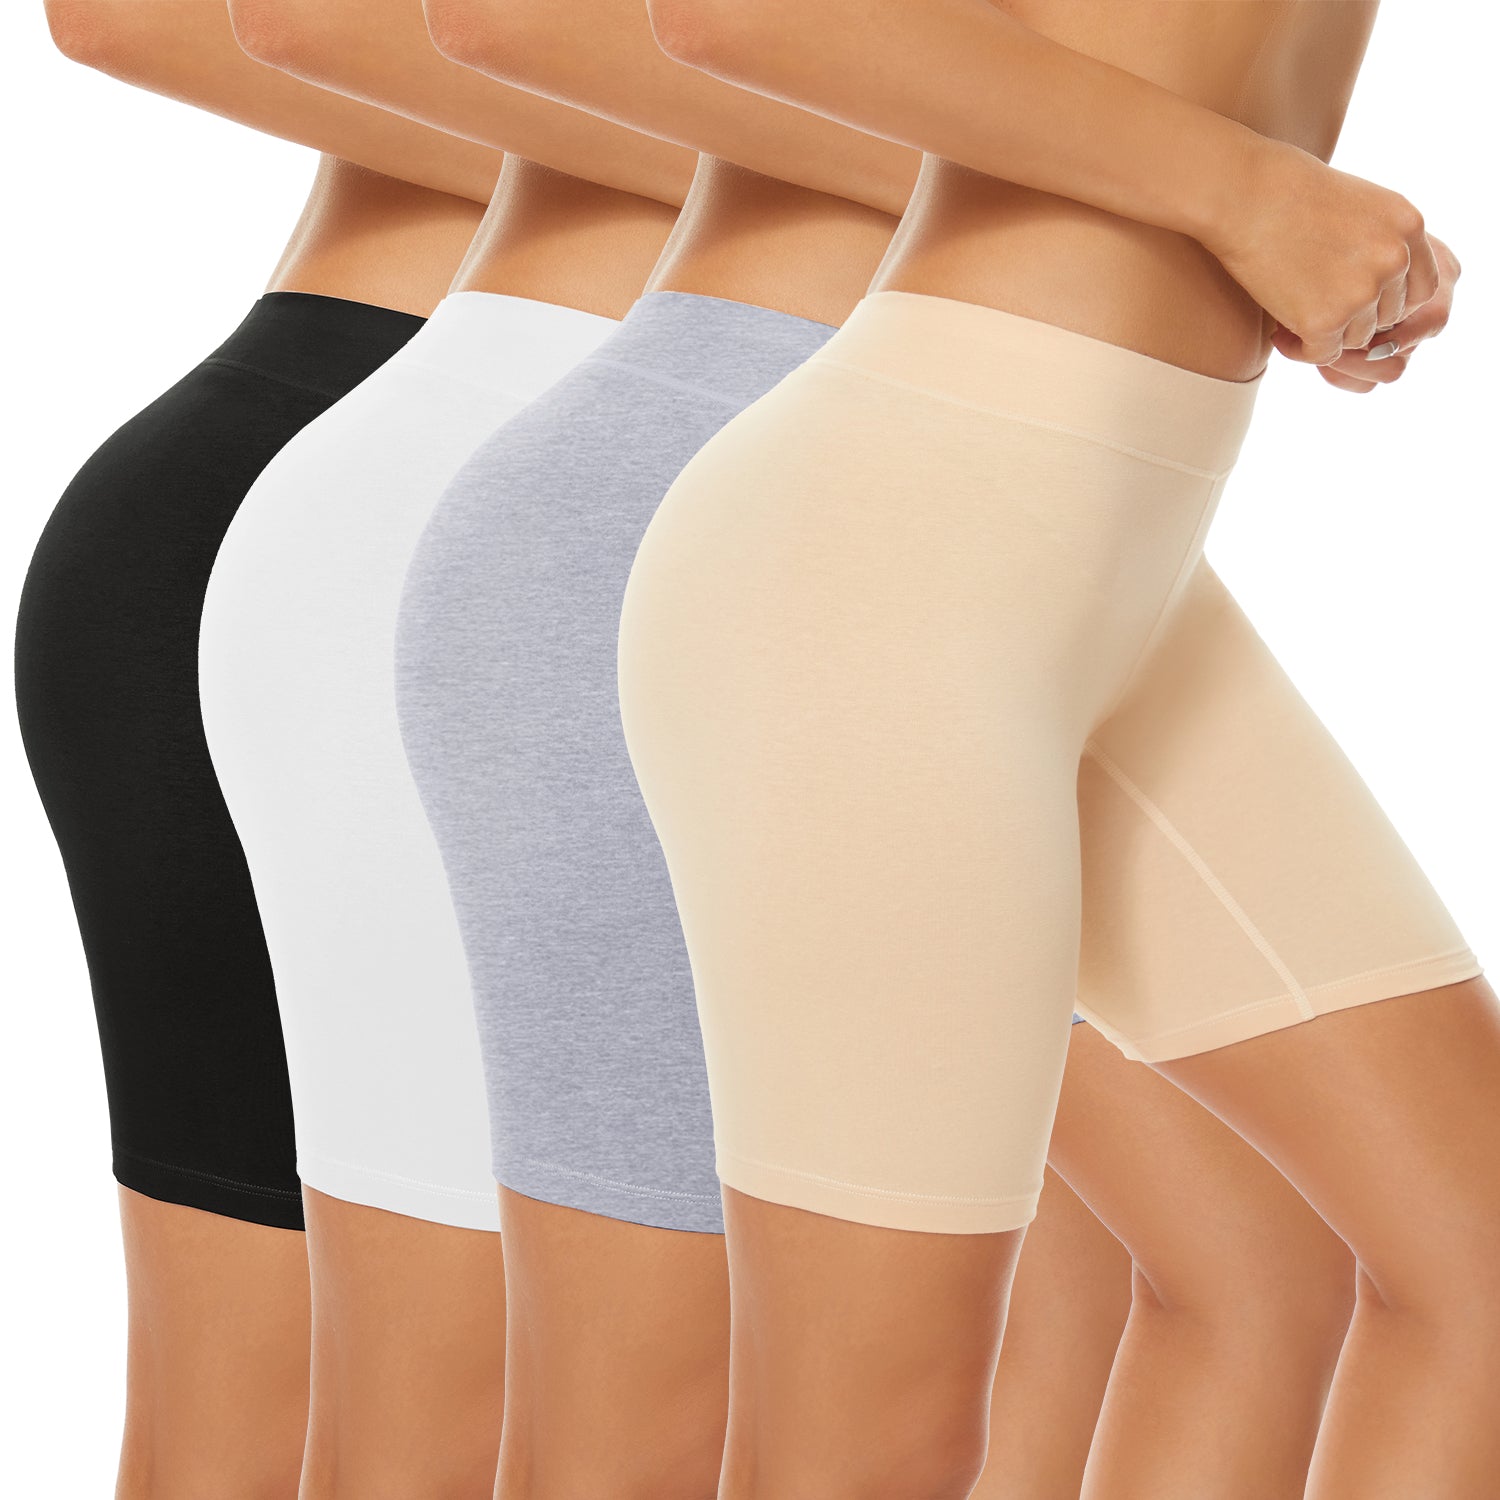 Ladies Safety Boxer Shorts Cotton Anti Chafing Underwear 2 Pack